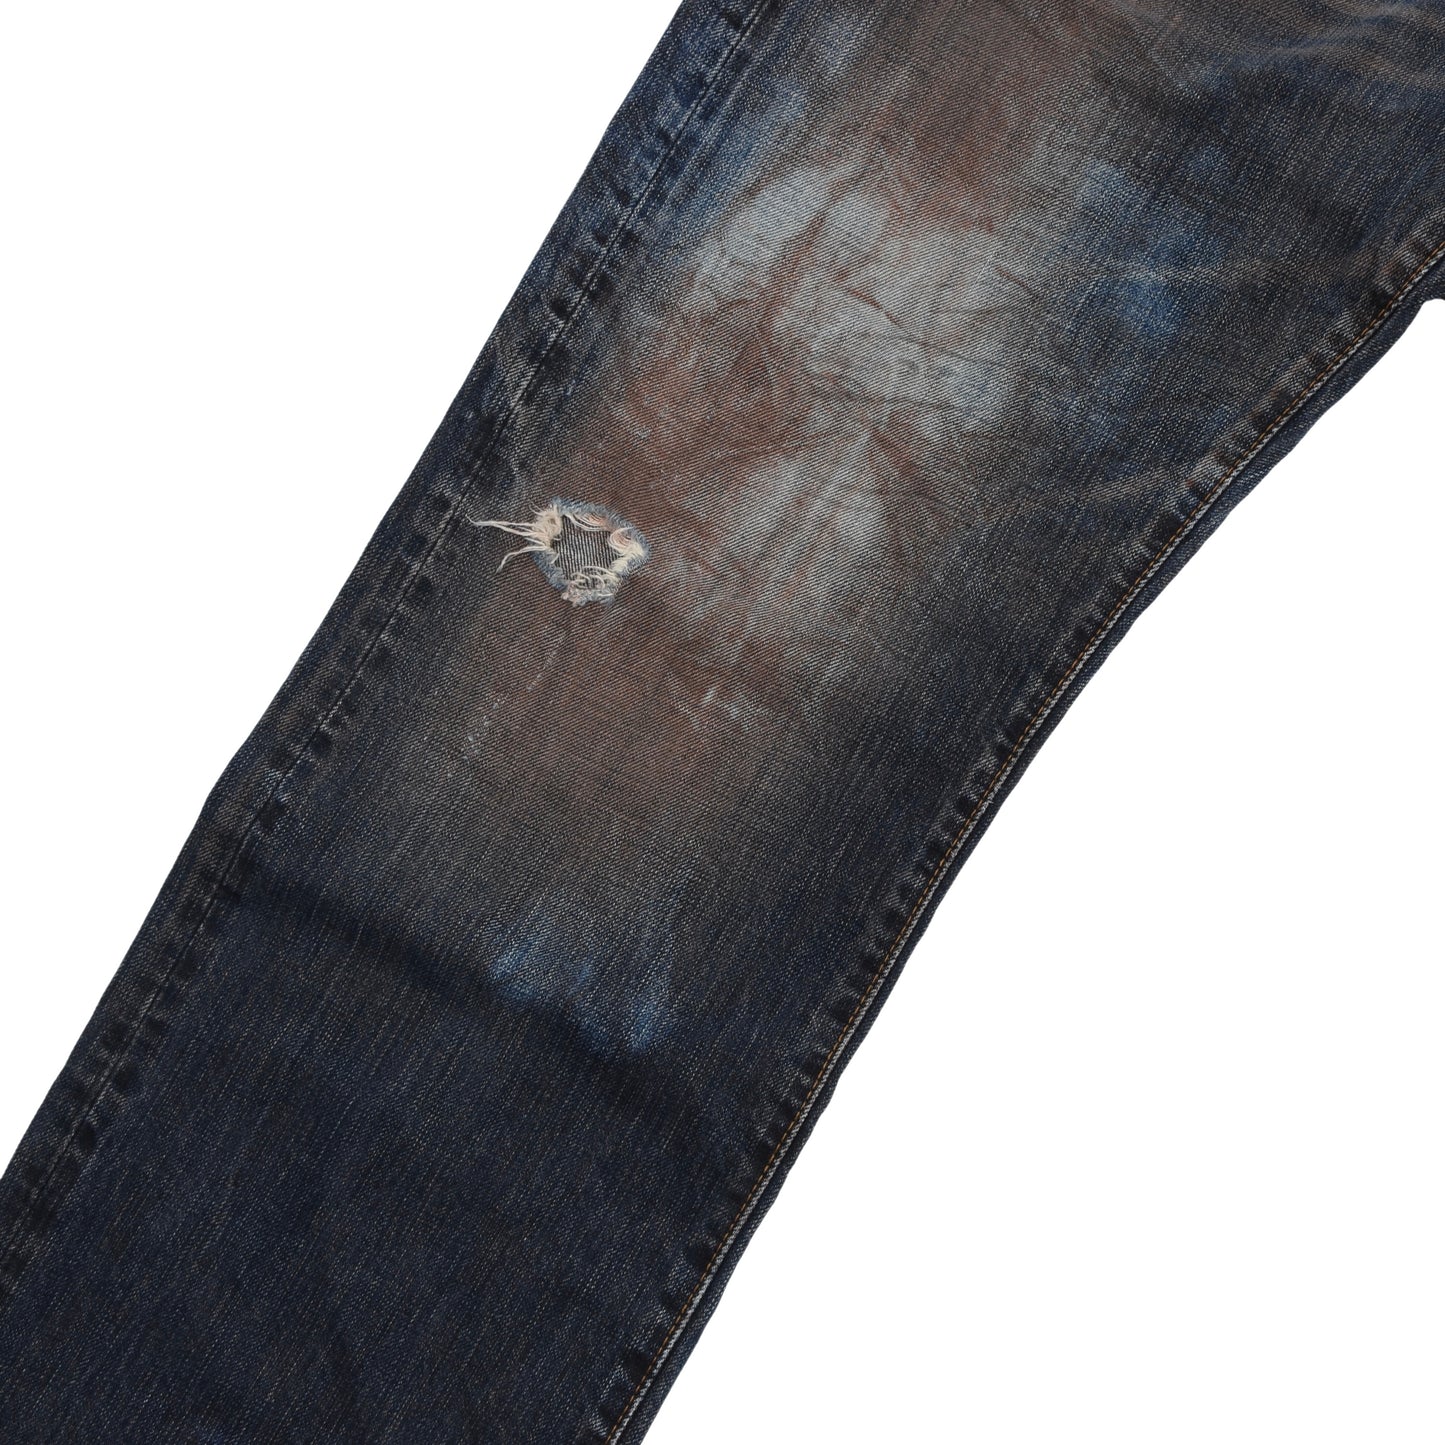 PRPS Jeans, Größe W33